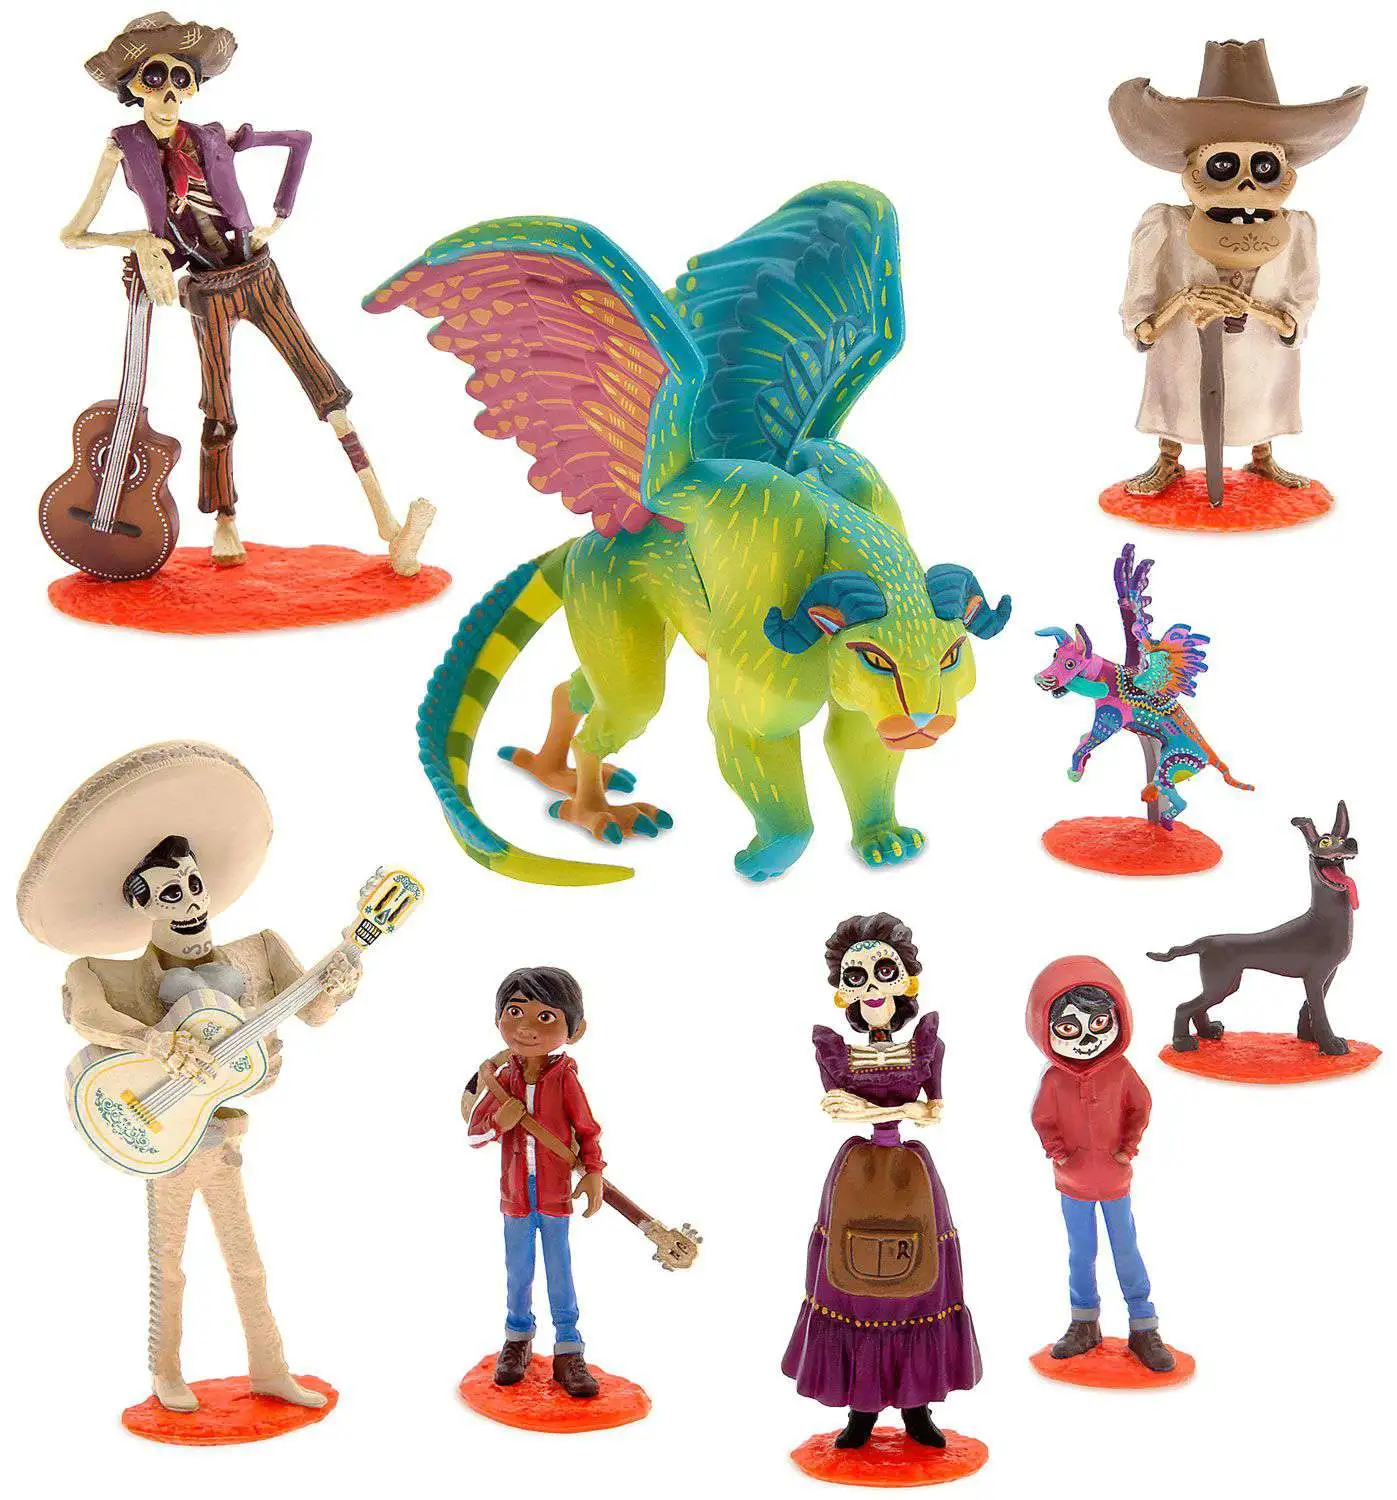 Disney Pixar Coco Deluxe Figurine Playset 8 Figures New 